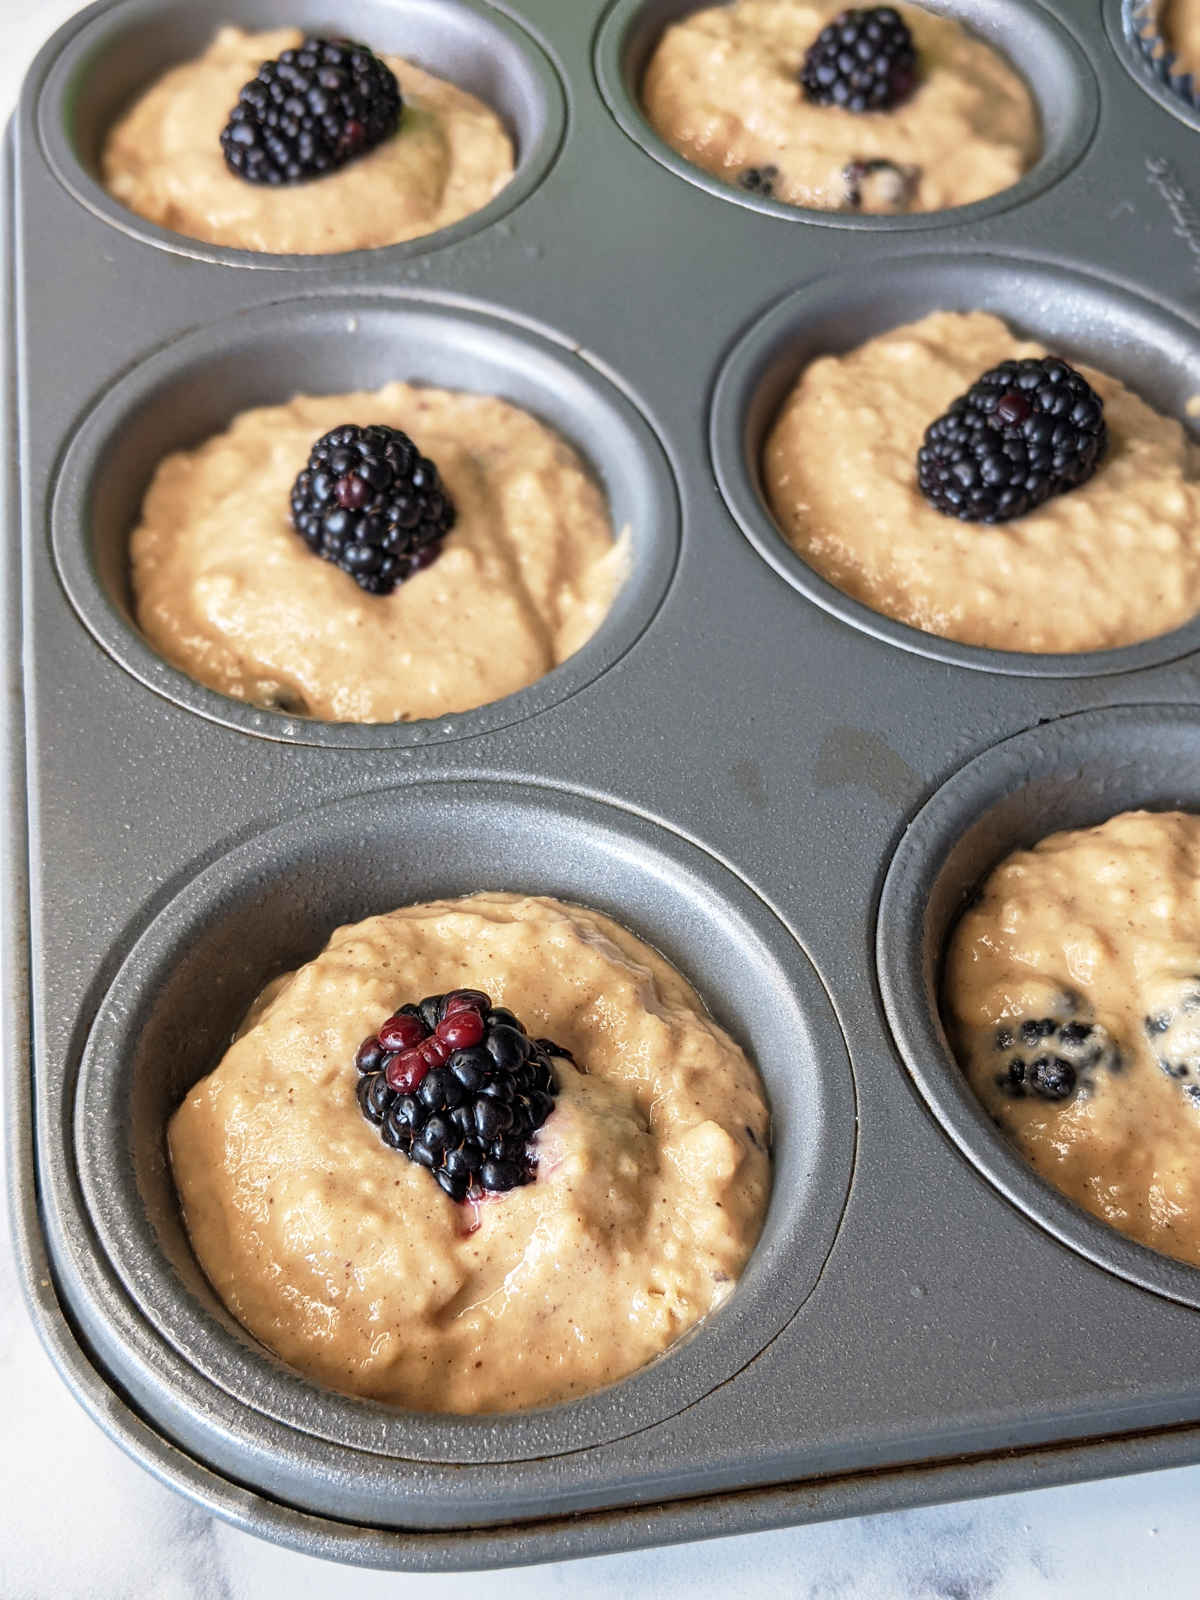 Prepared vegan blackberry muffins in pan before baking, topped with fresh blackberries.